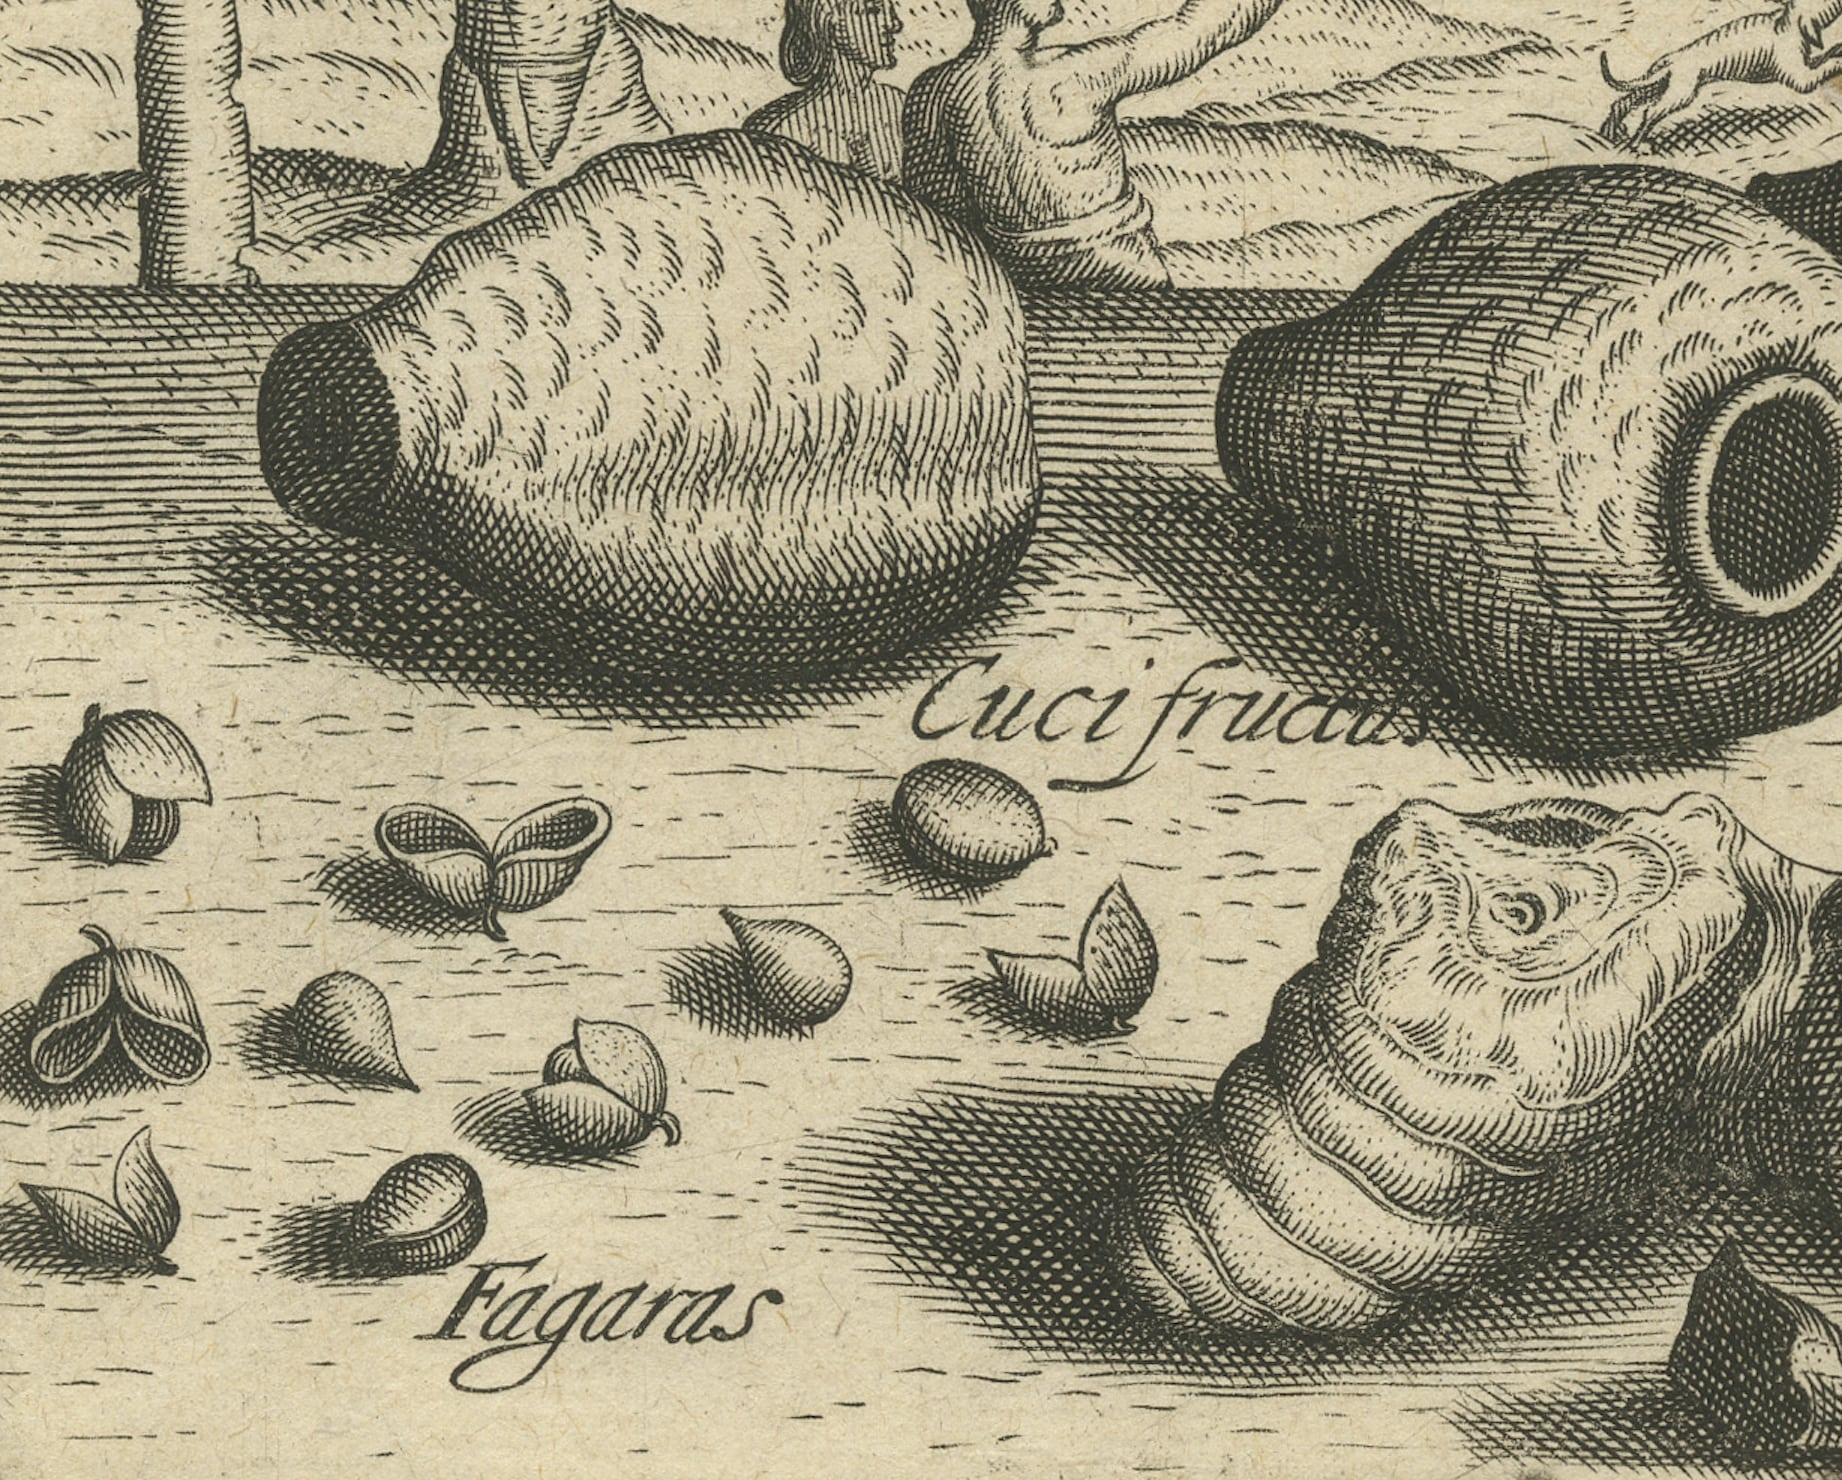 17th Century Treasures of the Tropics: Lac, Lancas, and Fagaras in De Bry's 1601 Engraving For Sale